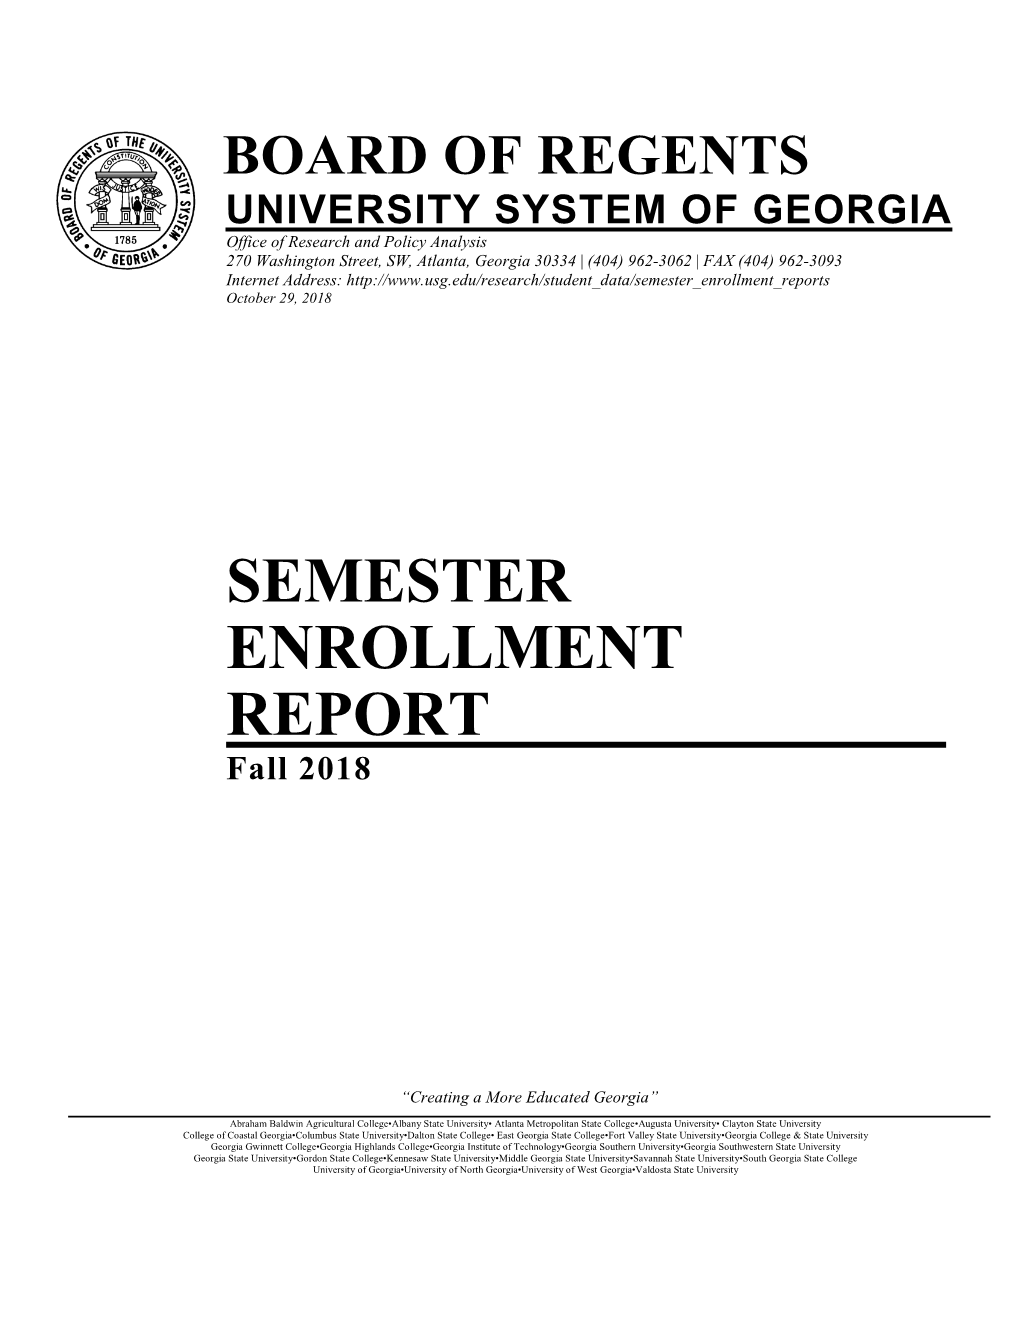 Fall 2018 Semester Enrollment Report Enrollment, FTE, and Full-Time Status